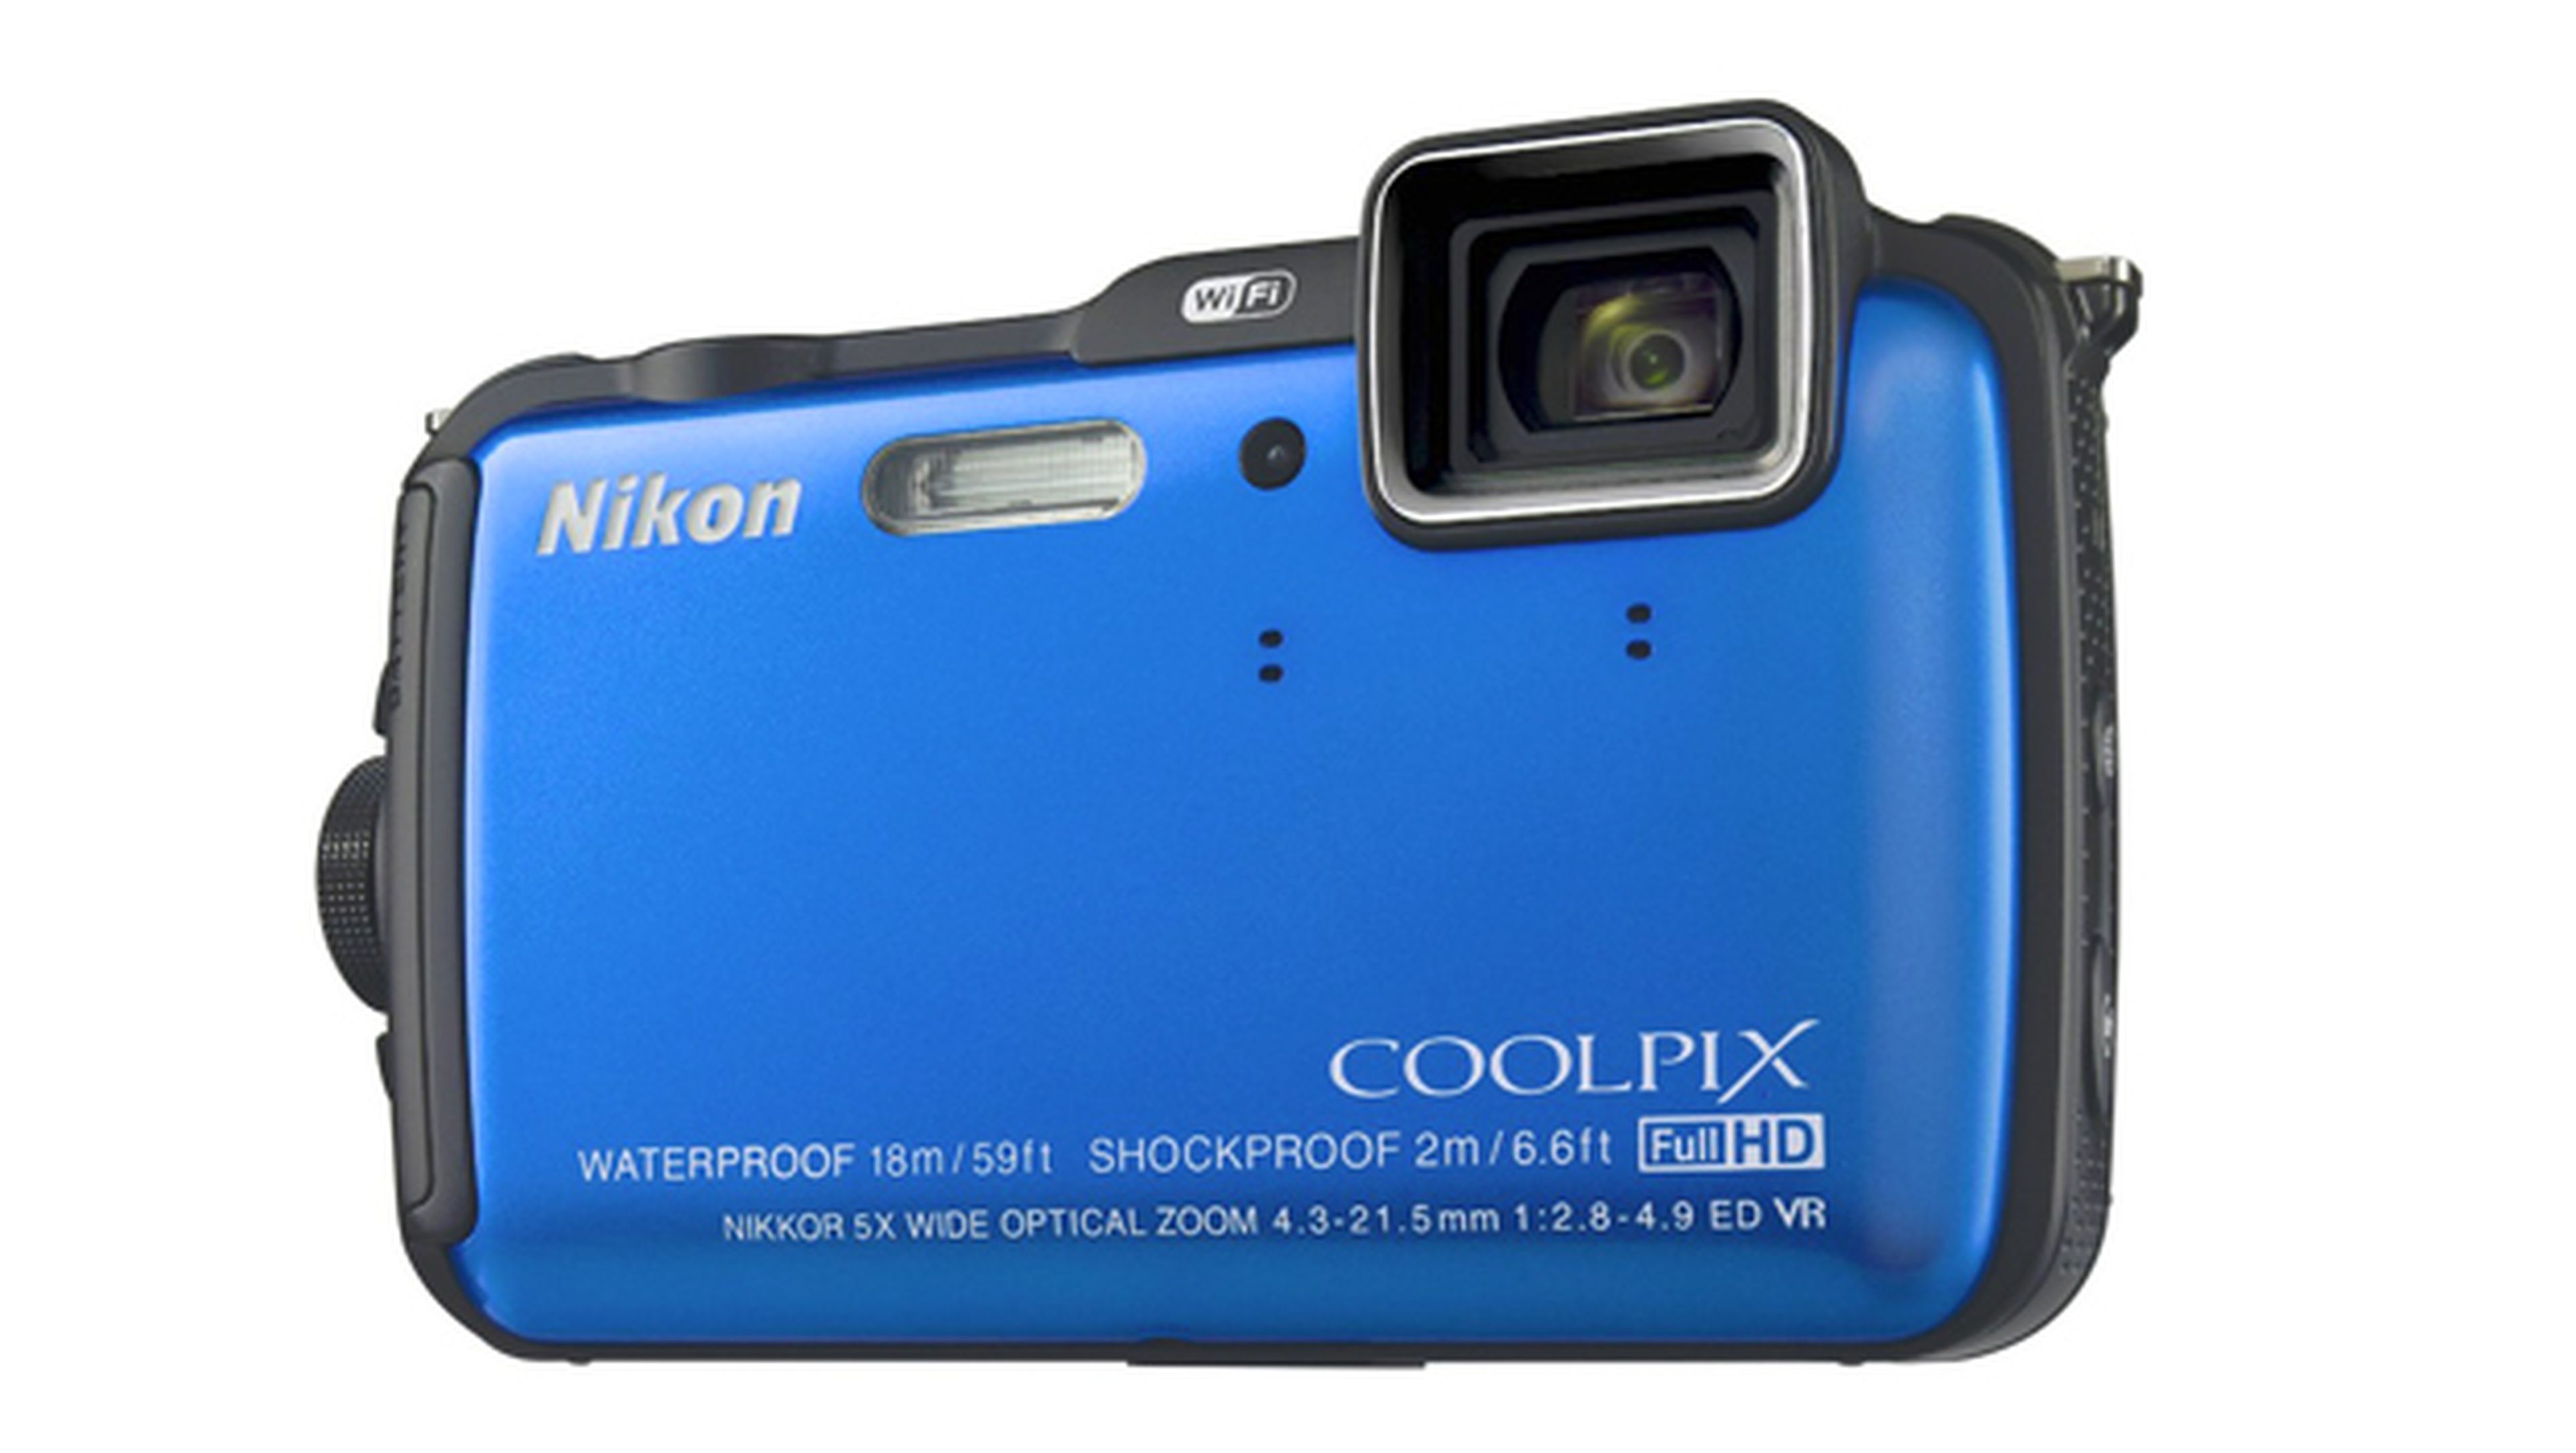 Nikon Coolpix aw120